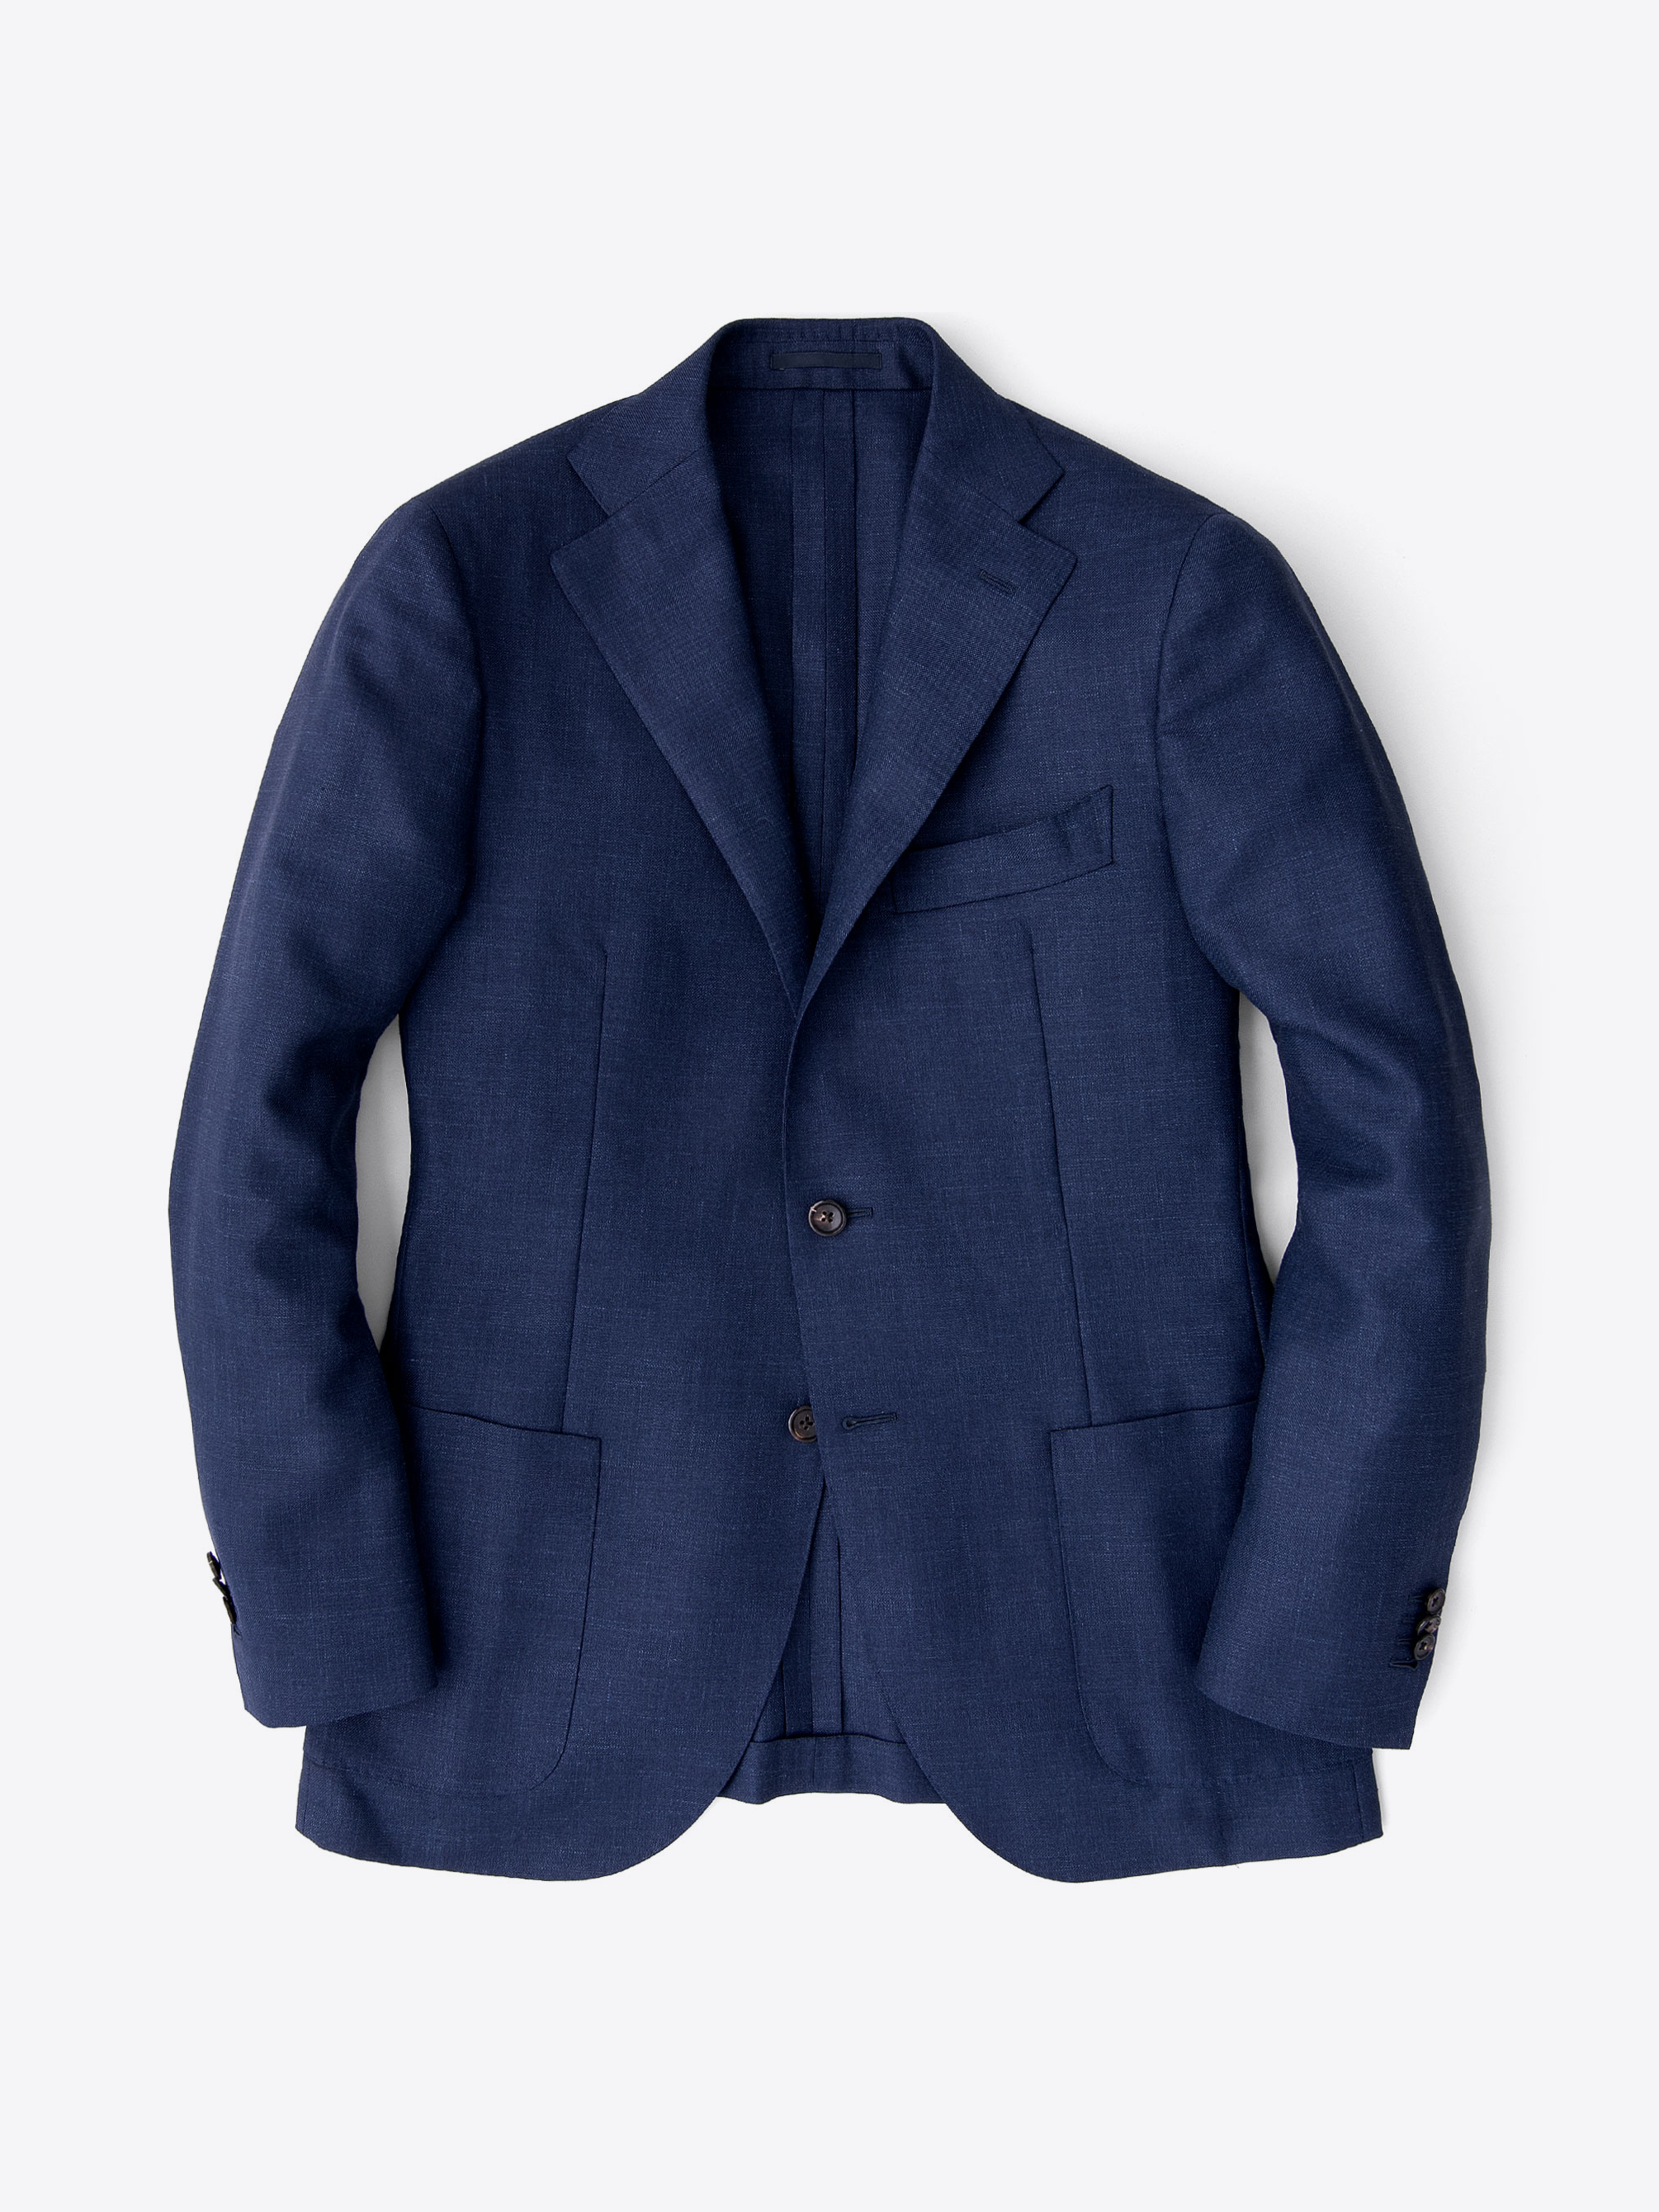 Hudson Navy Lightweight Summer Twill Jacket by Proper Cloth